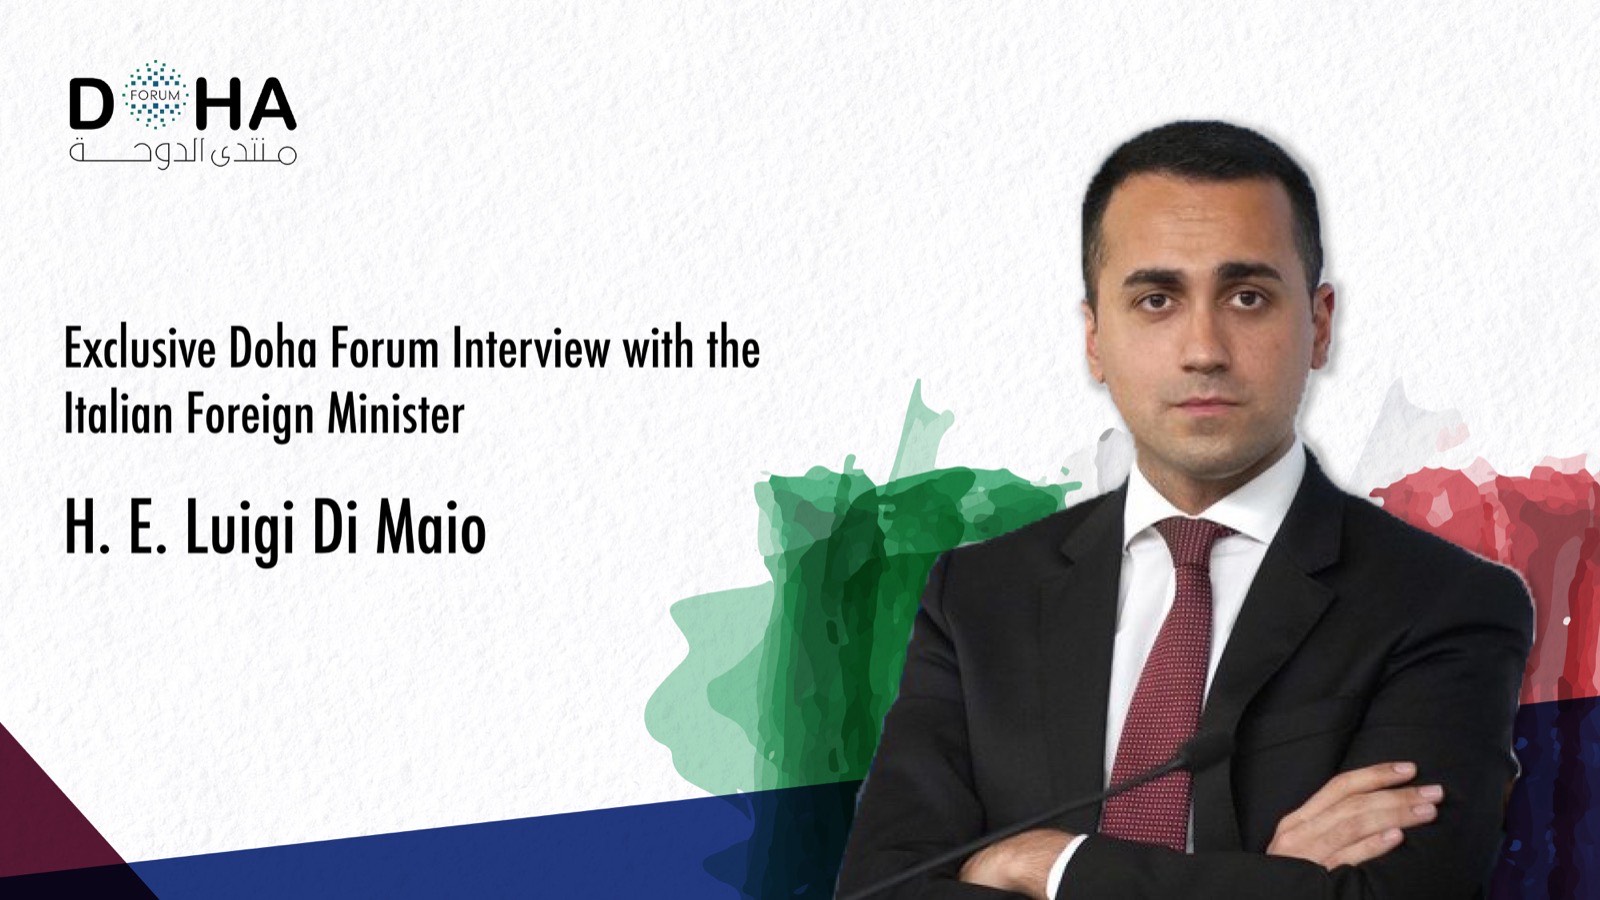 Exclusive Doha Forum Interview with Italian Foreign Minister H.E Luigi Di Maio